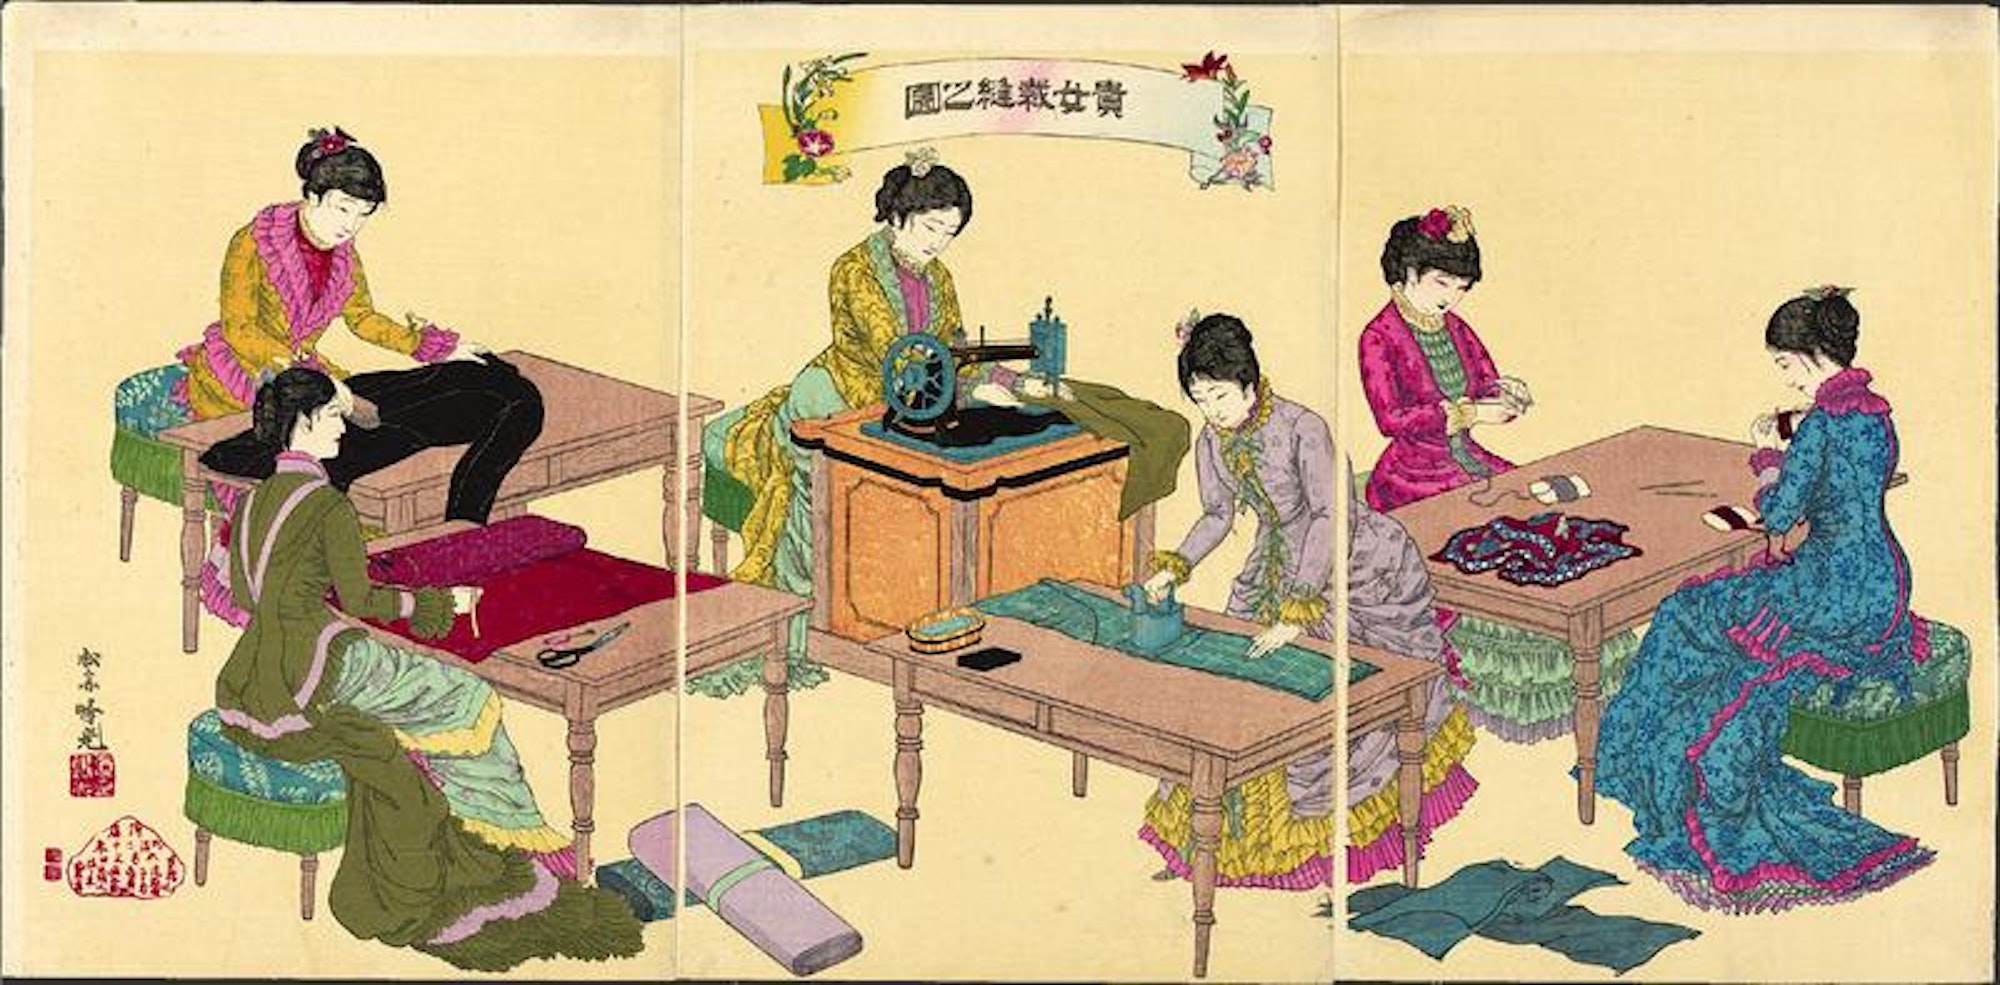 Artwork portraying working women during the Meiji Era